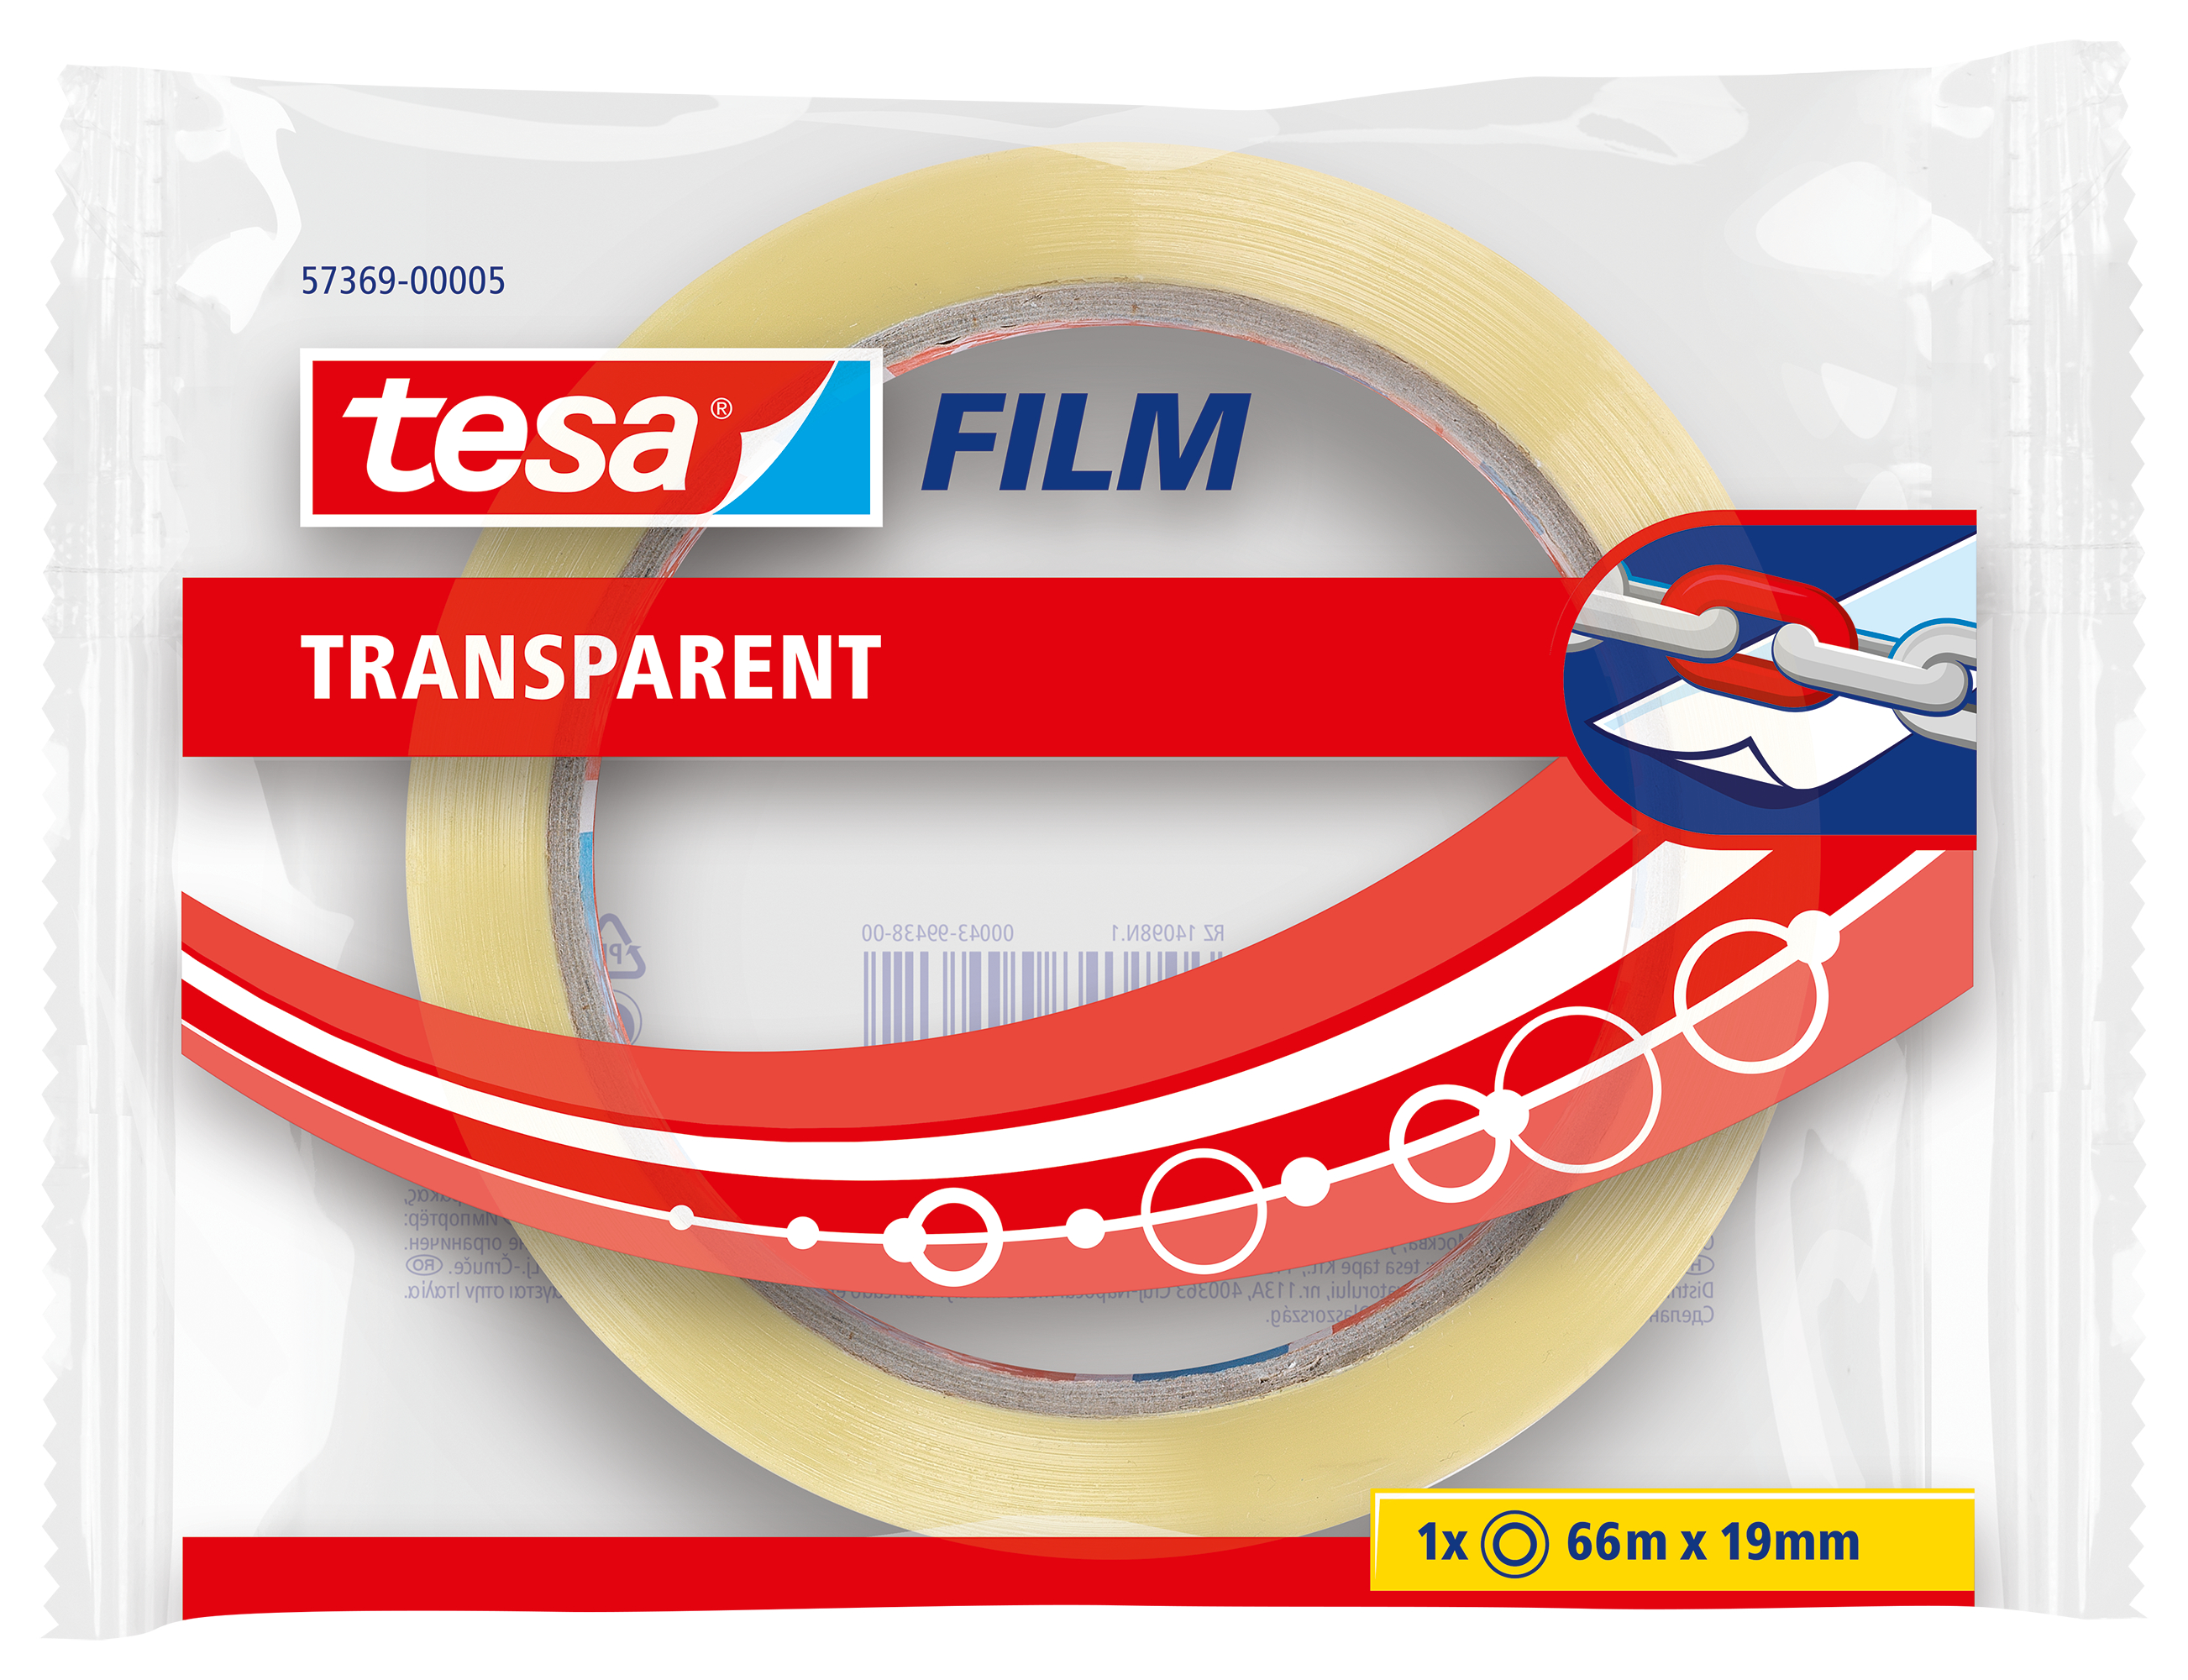 TESA tesafilm Flowpack 66mx19mm 573690000 transparent 1 rouleau